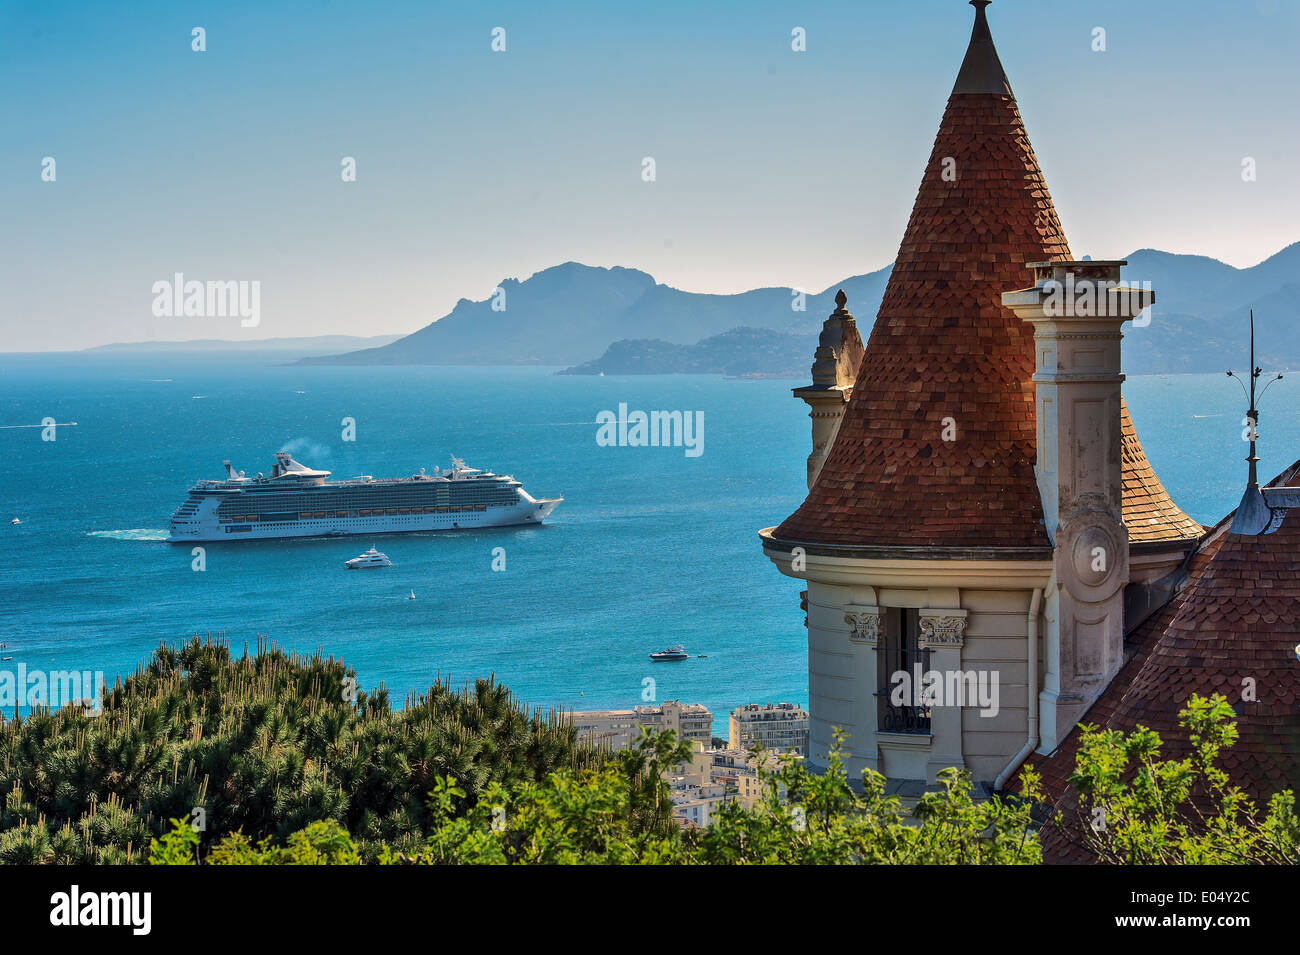 Europa, Francia, Alpes-Maritimes, Cannes. Crucero en la bahía de Cannes. Foto de stock